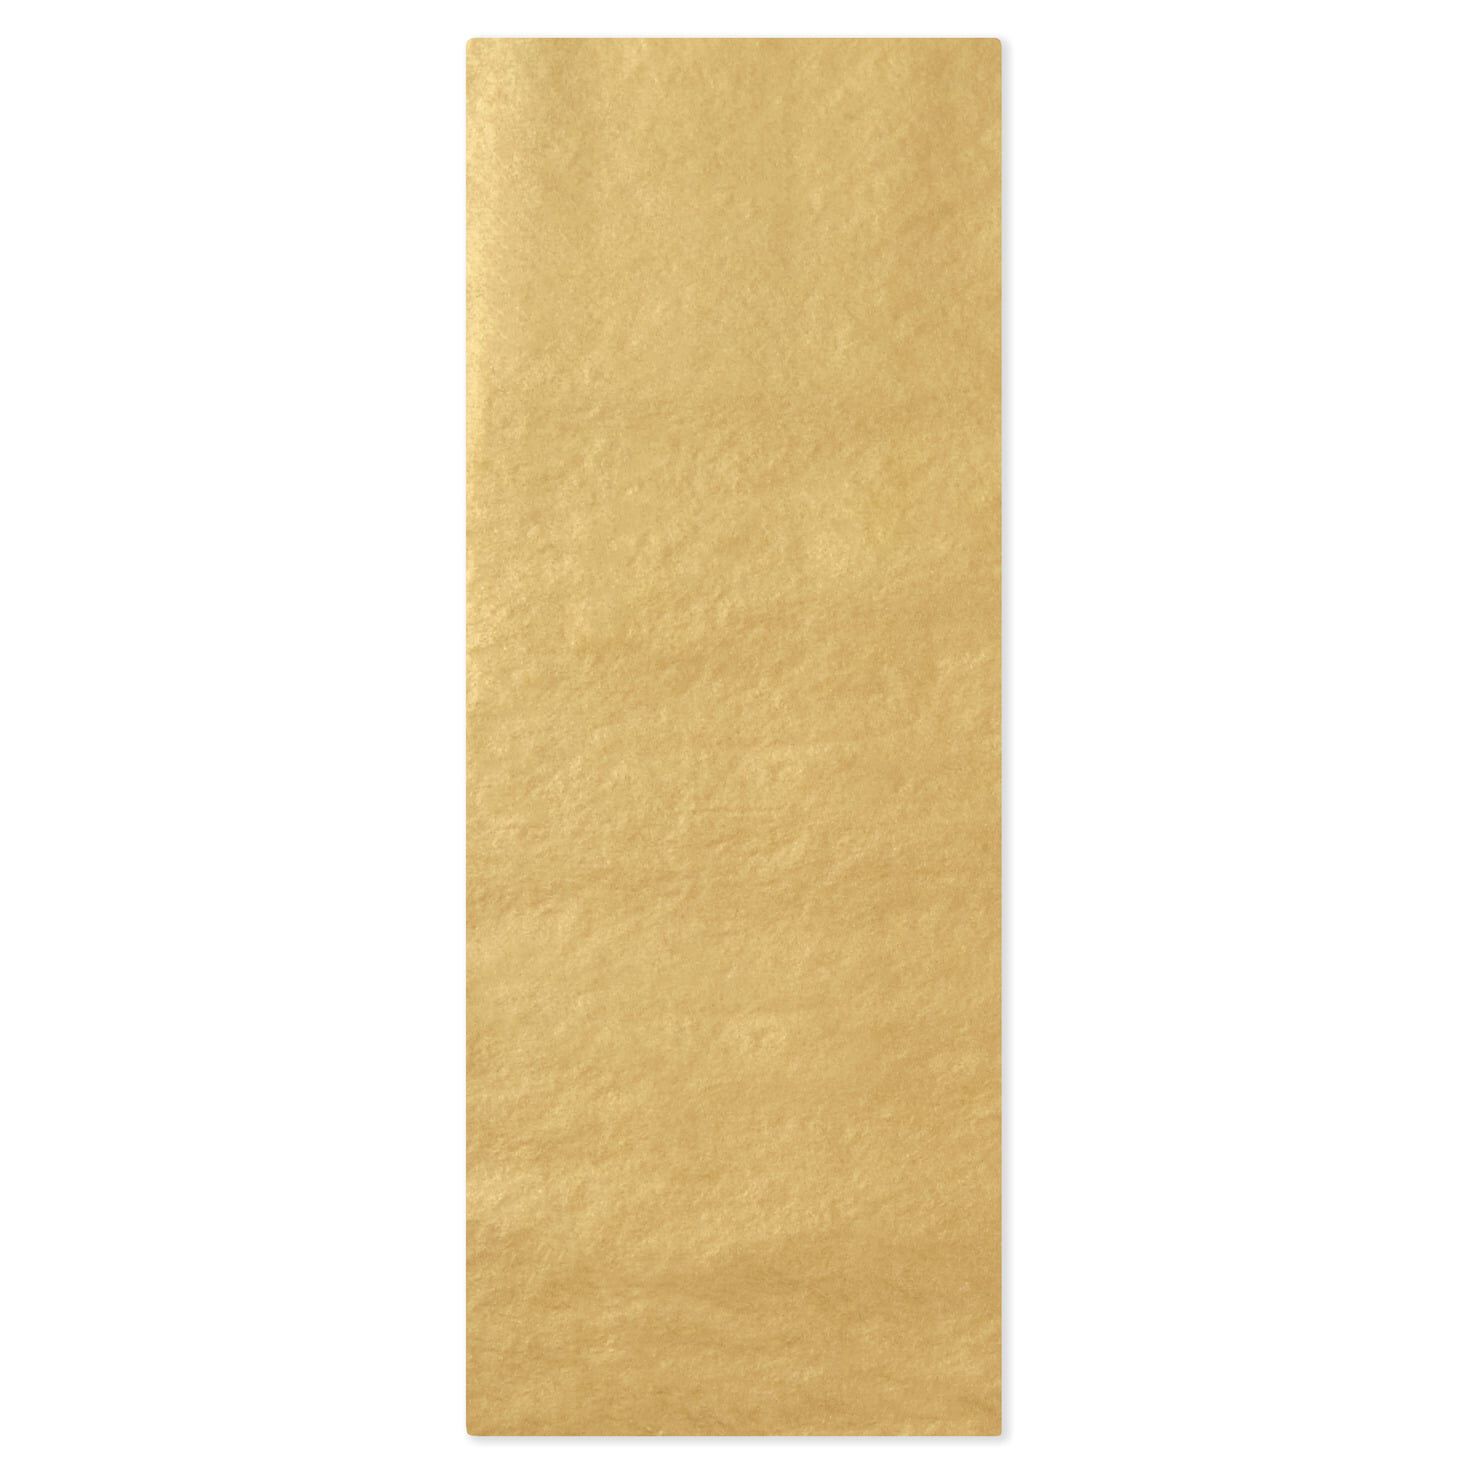 Gold Foil Flecks on White Tissue Paper, 4 sheets - Tissue - Hallmark